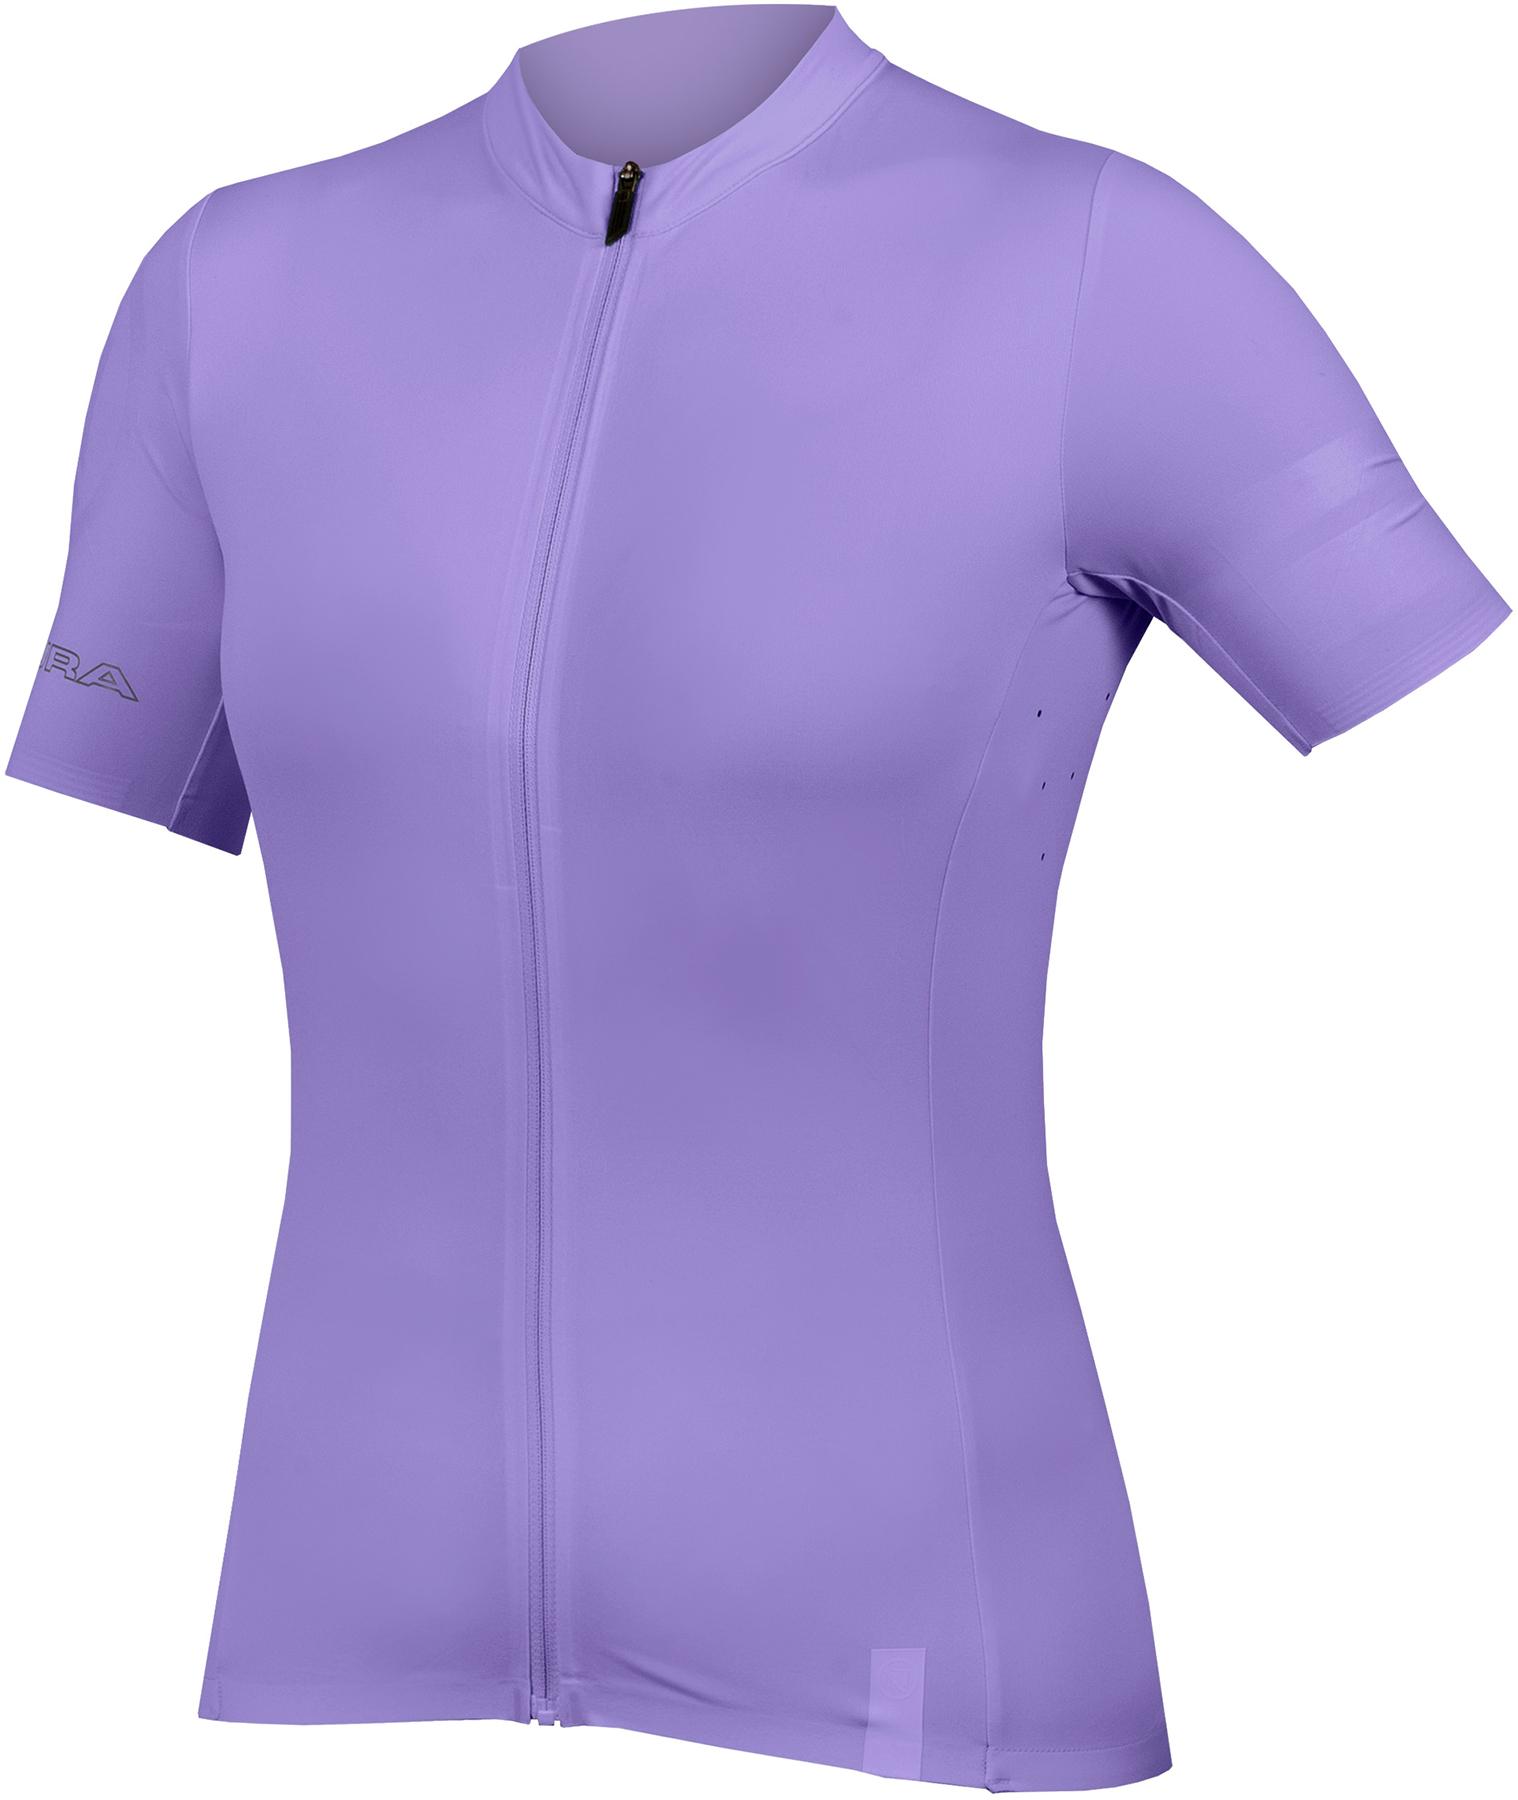 Endura Womens Pro Sl Short Sleeve Jersey - Violet